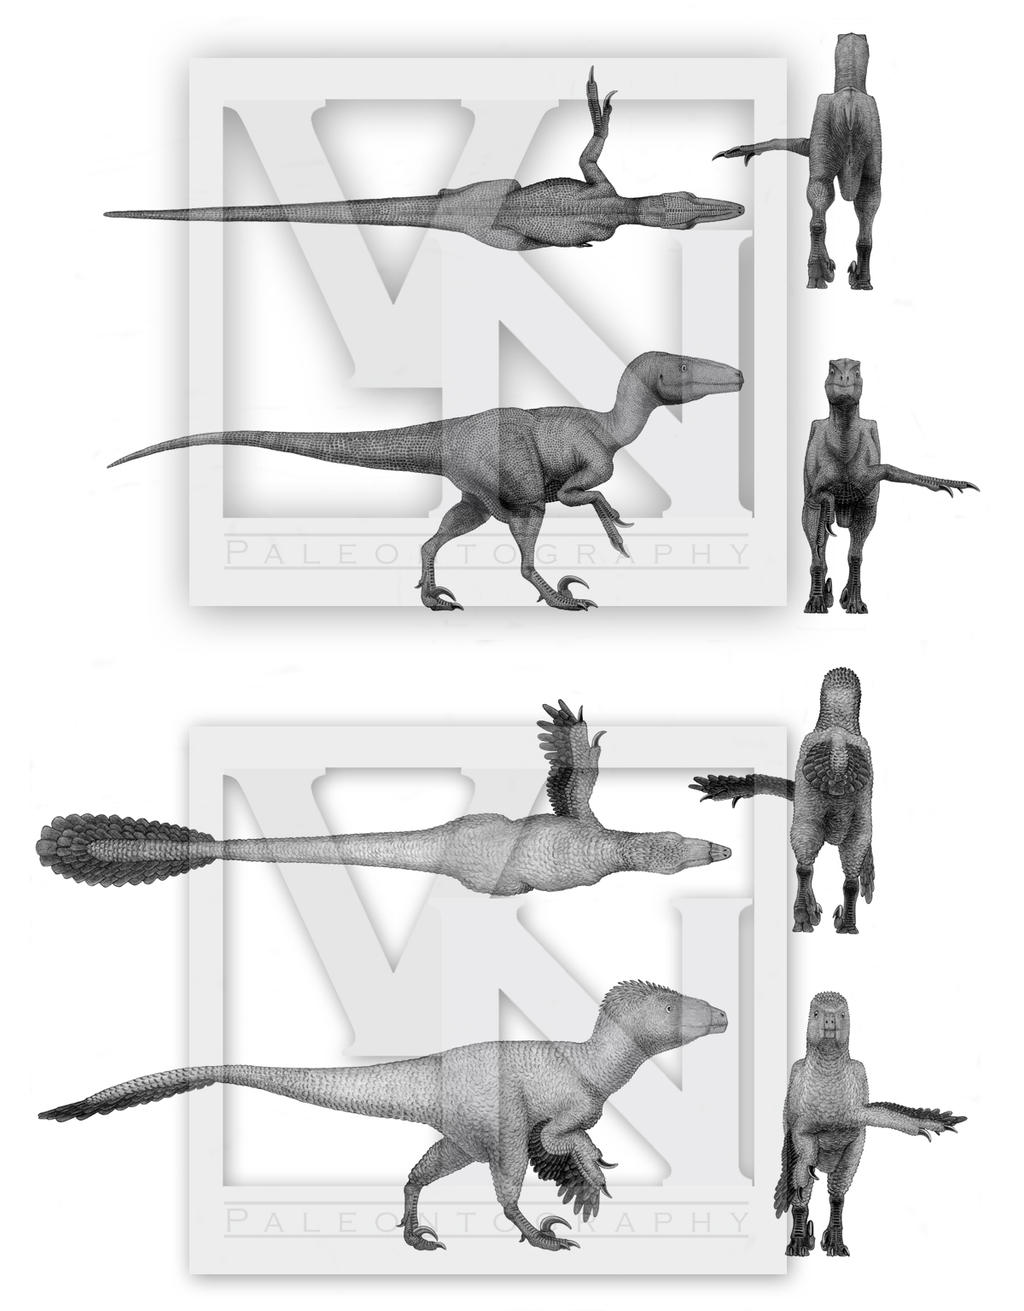 Utahraptor concept art